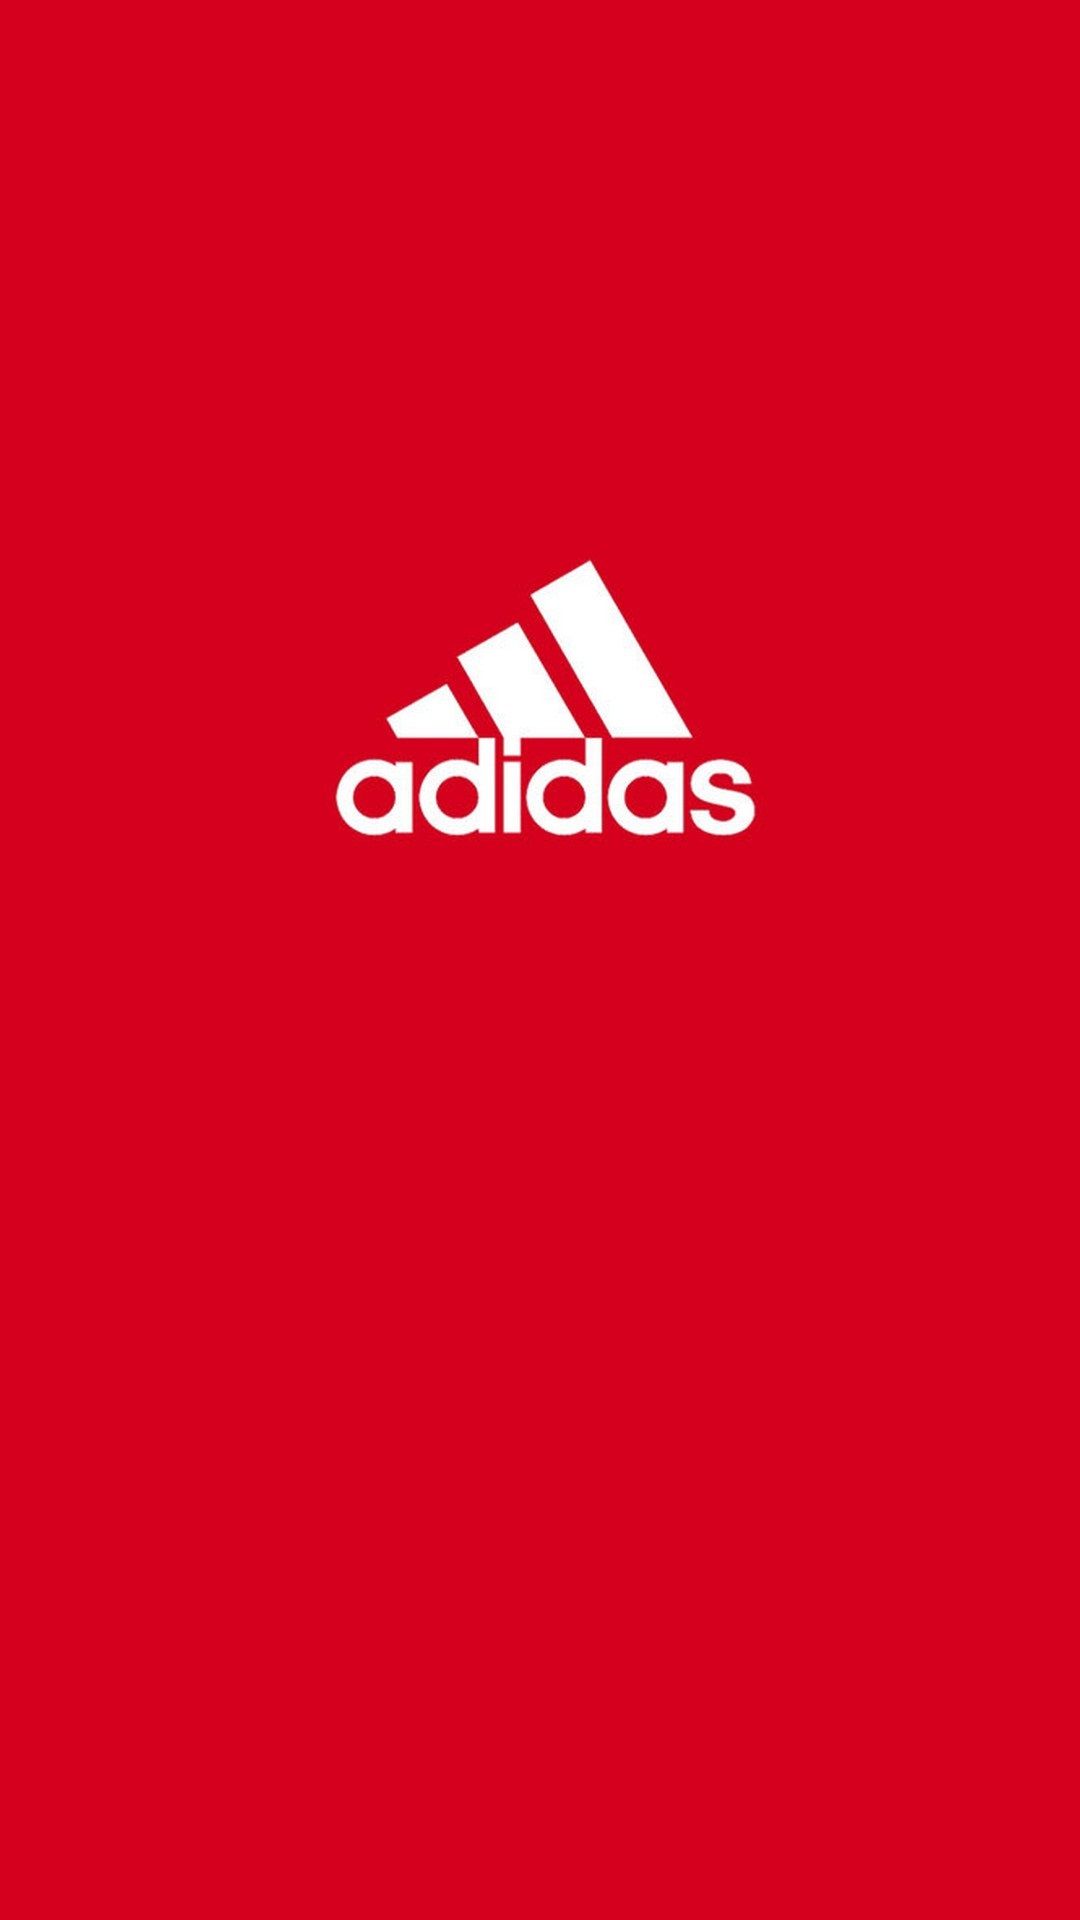 Adidas Logo iPhone X Wallpapers HD